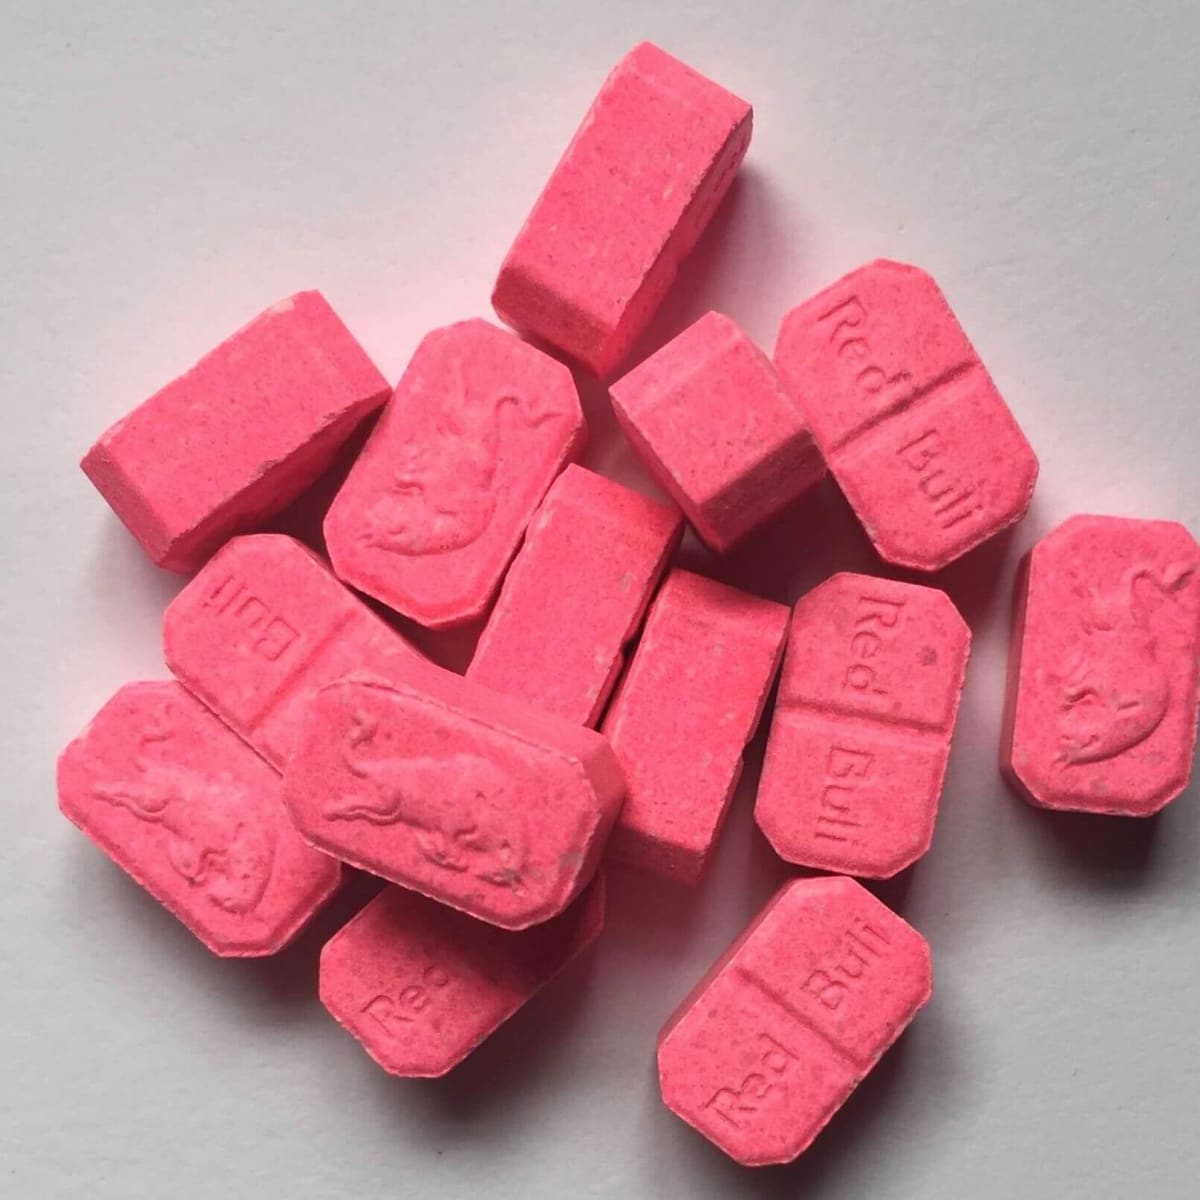 Red Bull MDMA Pills.